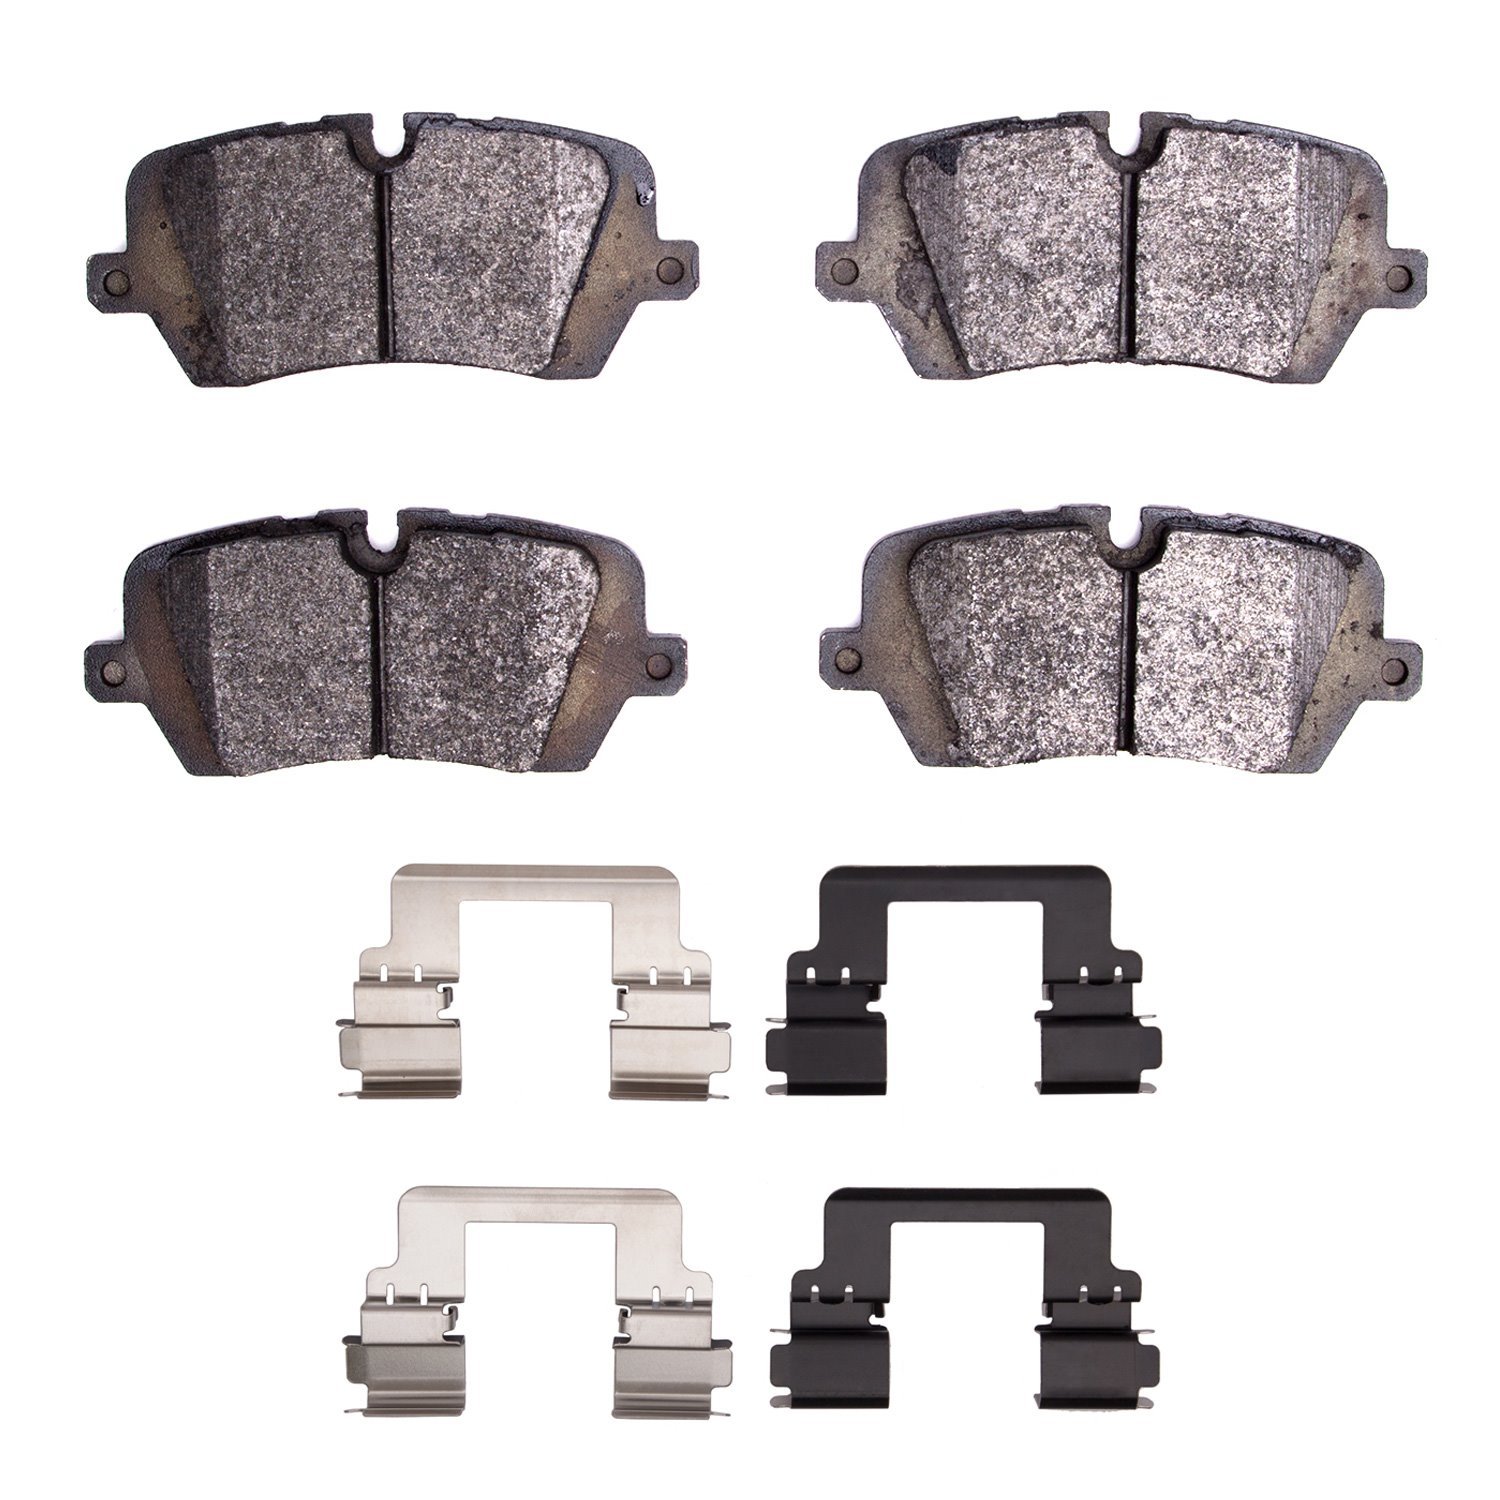 1310-1692-01 3000-Series Ceramic Brake Pads & Hardware Kit, Fits Select Land Rover, Position: Rear